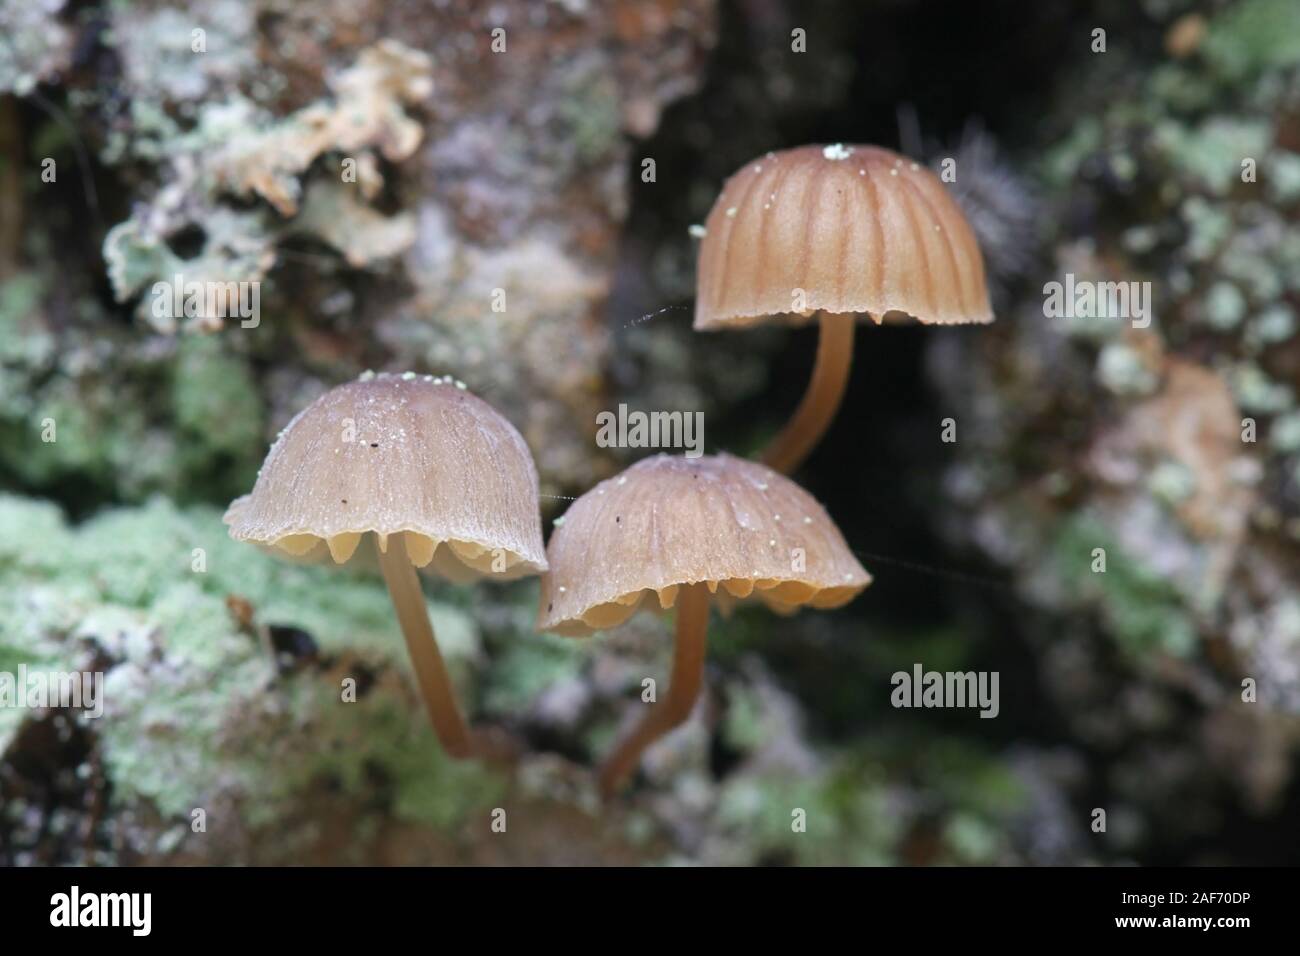 Mycena meliigena, a bonnet mushroom growing on oak trunk Stock Photo